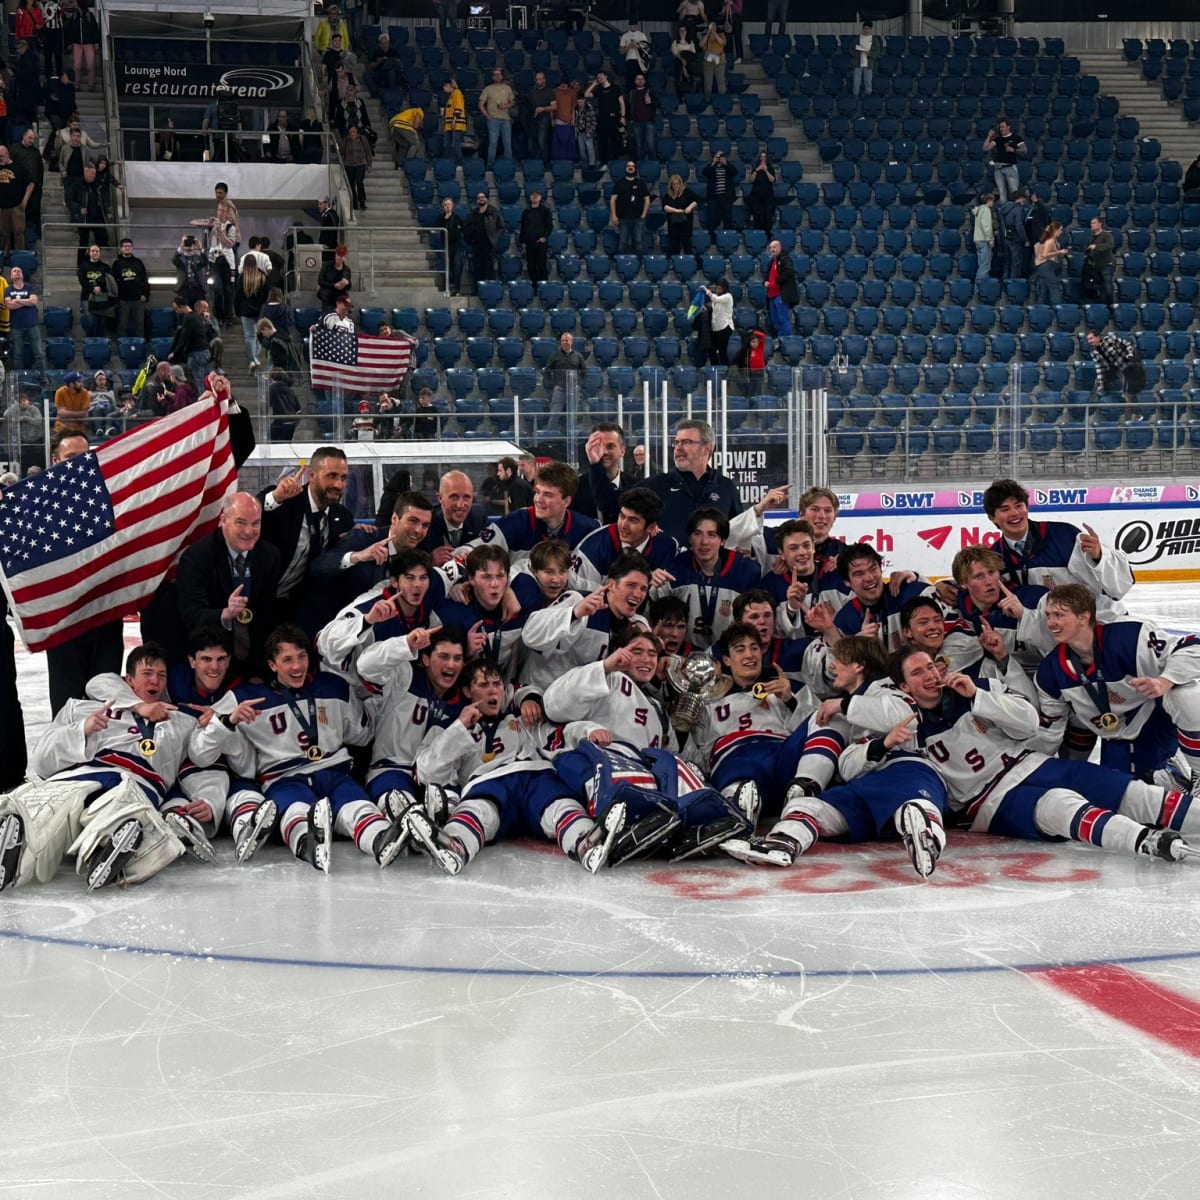 USA upsets Canada to win world junior hockey championship